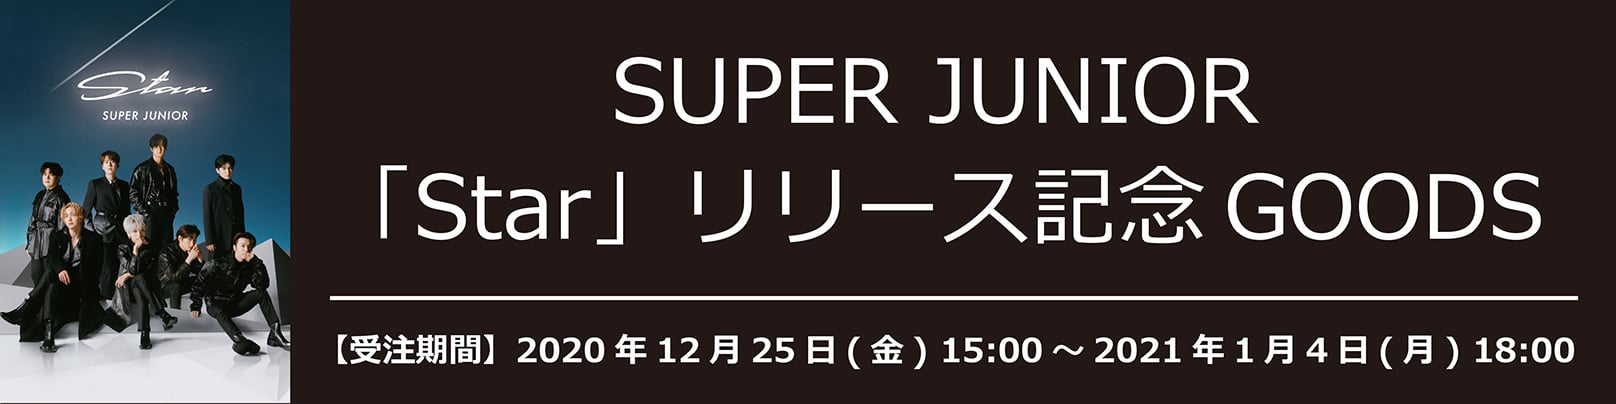 SUPER JUNIOR New Album「Star」2021年1月27日リリース